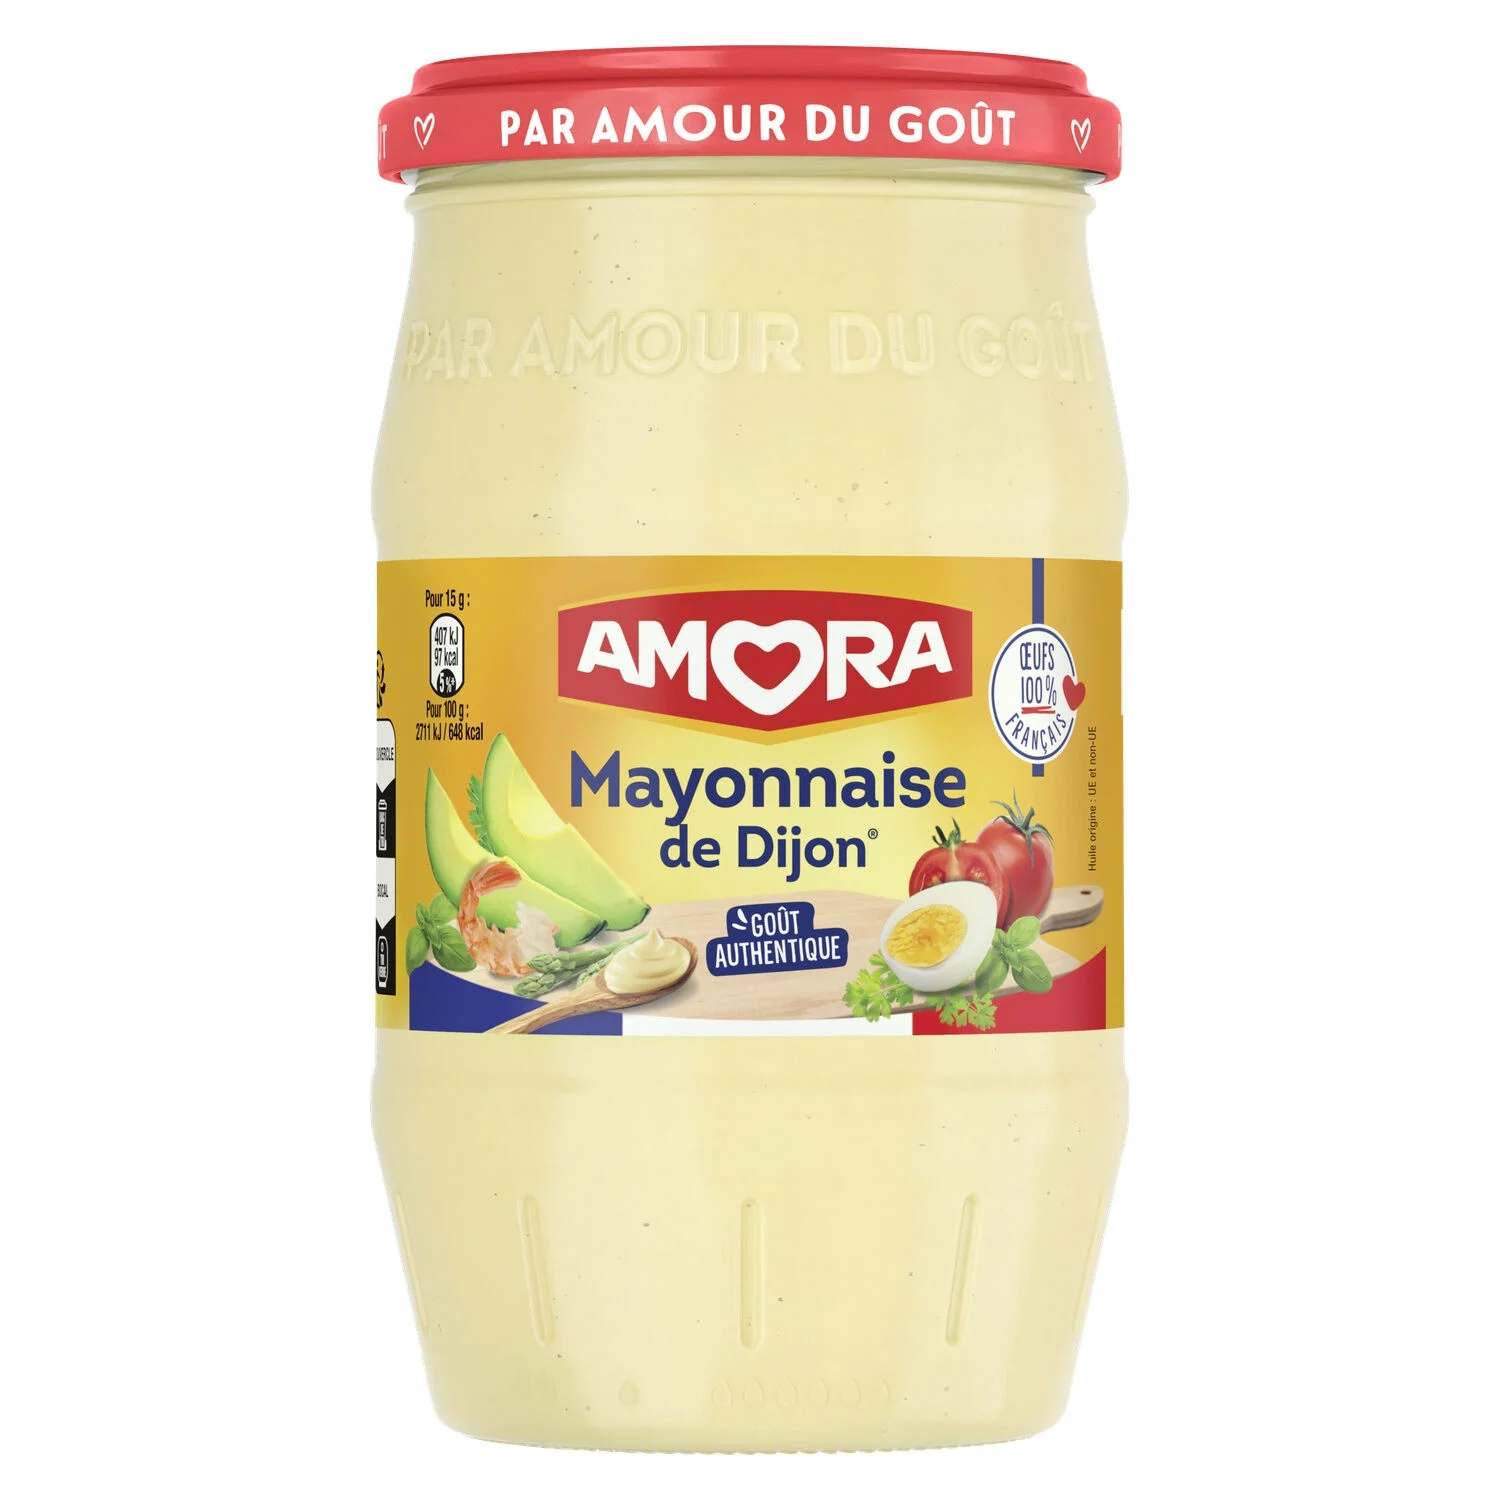 Amora Mayo Dijon Bocal 605g